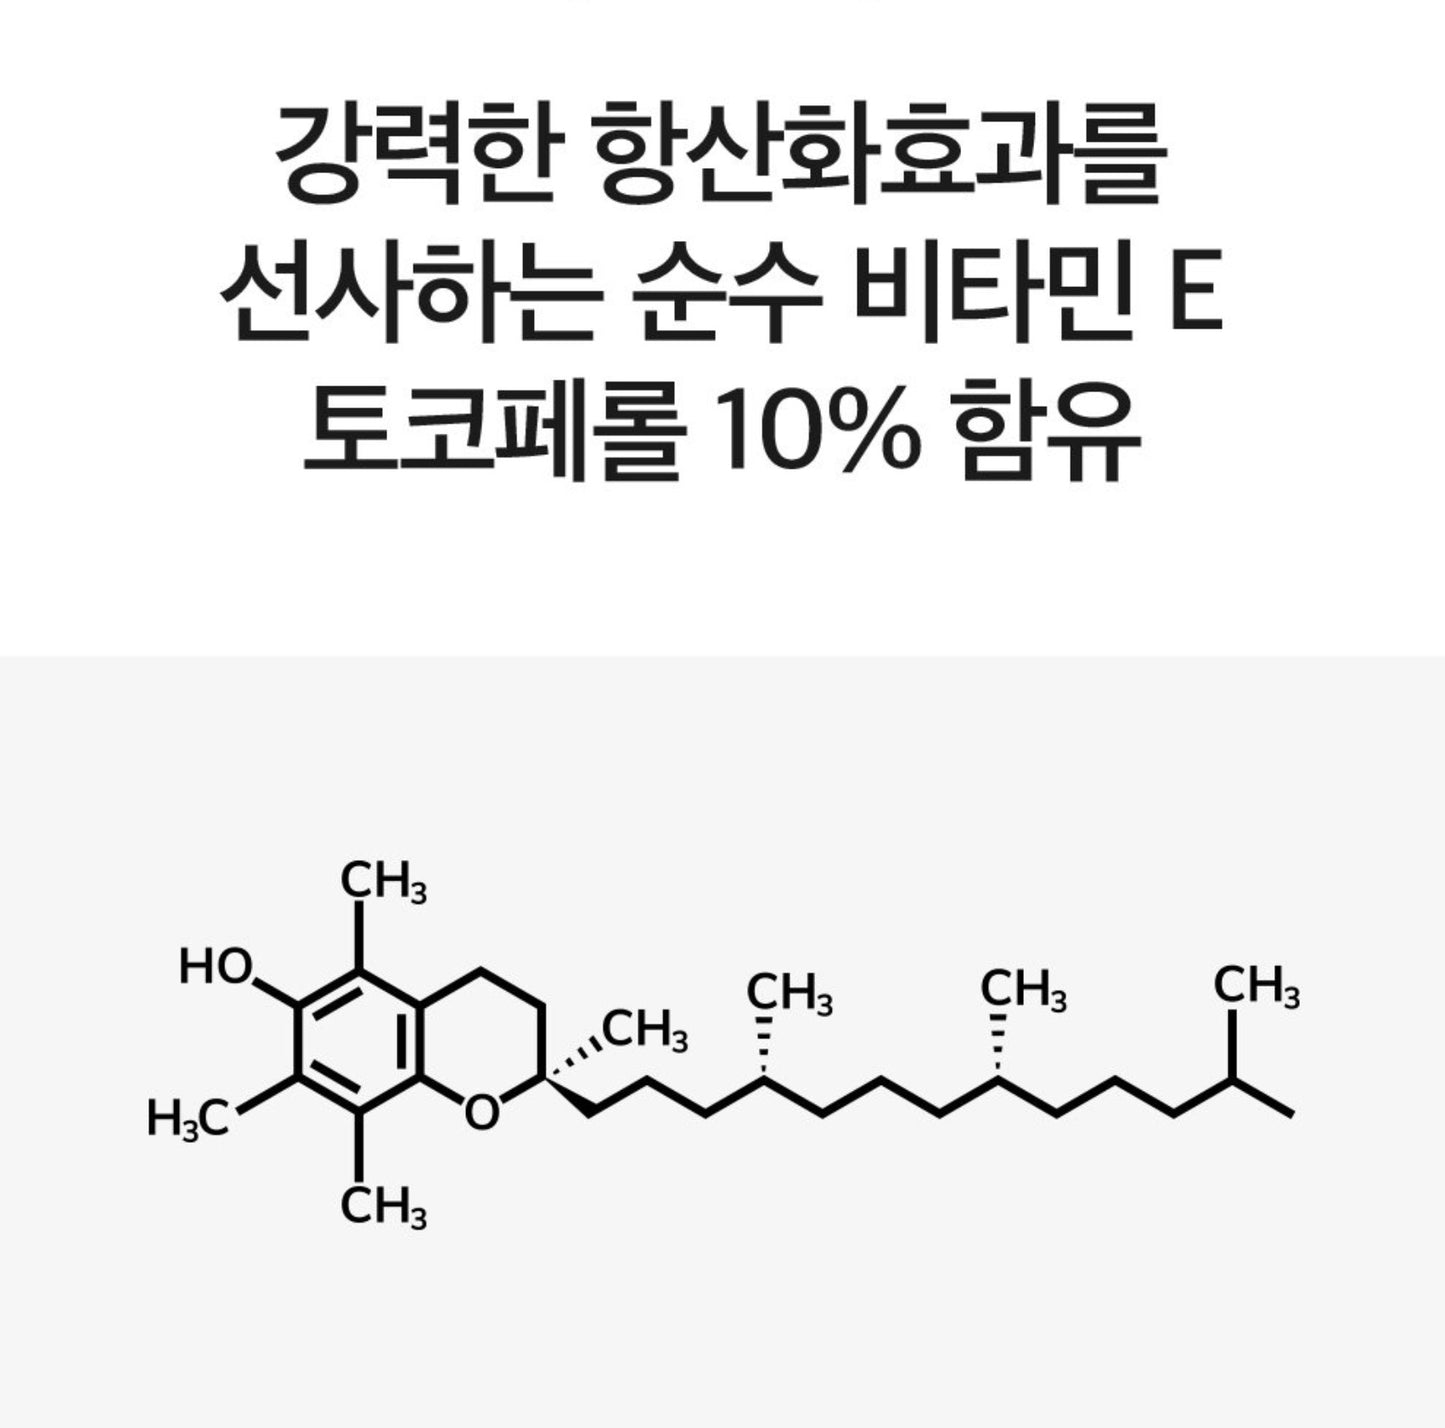 DERMA FACTORY Vitamin E 10% Ampoule Stick Multi Balm Jojoba Oil Sunflower Seed Oil Skin Moisturizing Elasticity Wrinkle Whitening / from Seoul, Korea